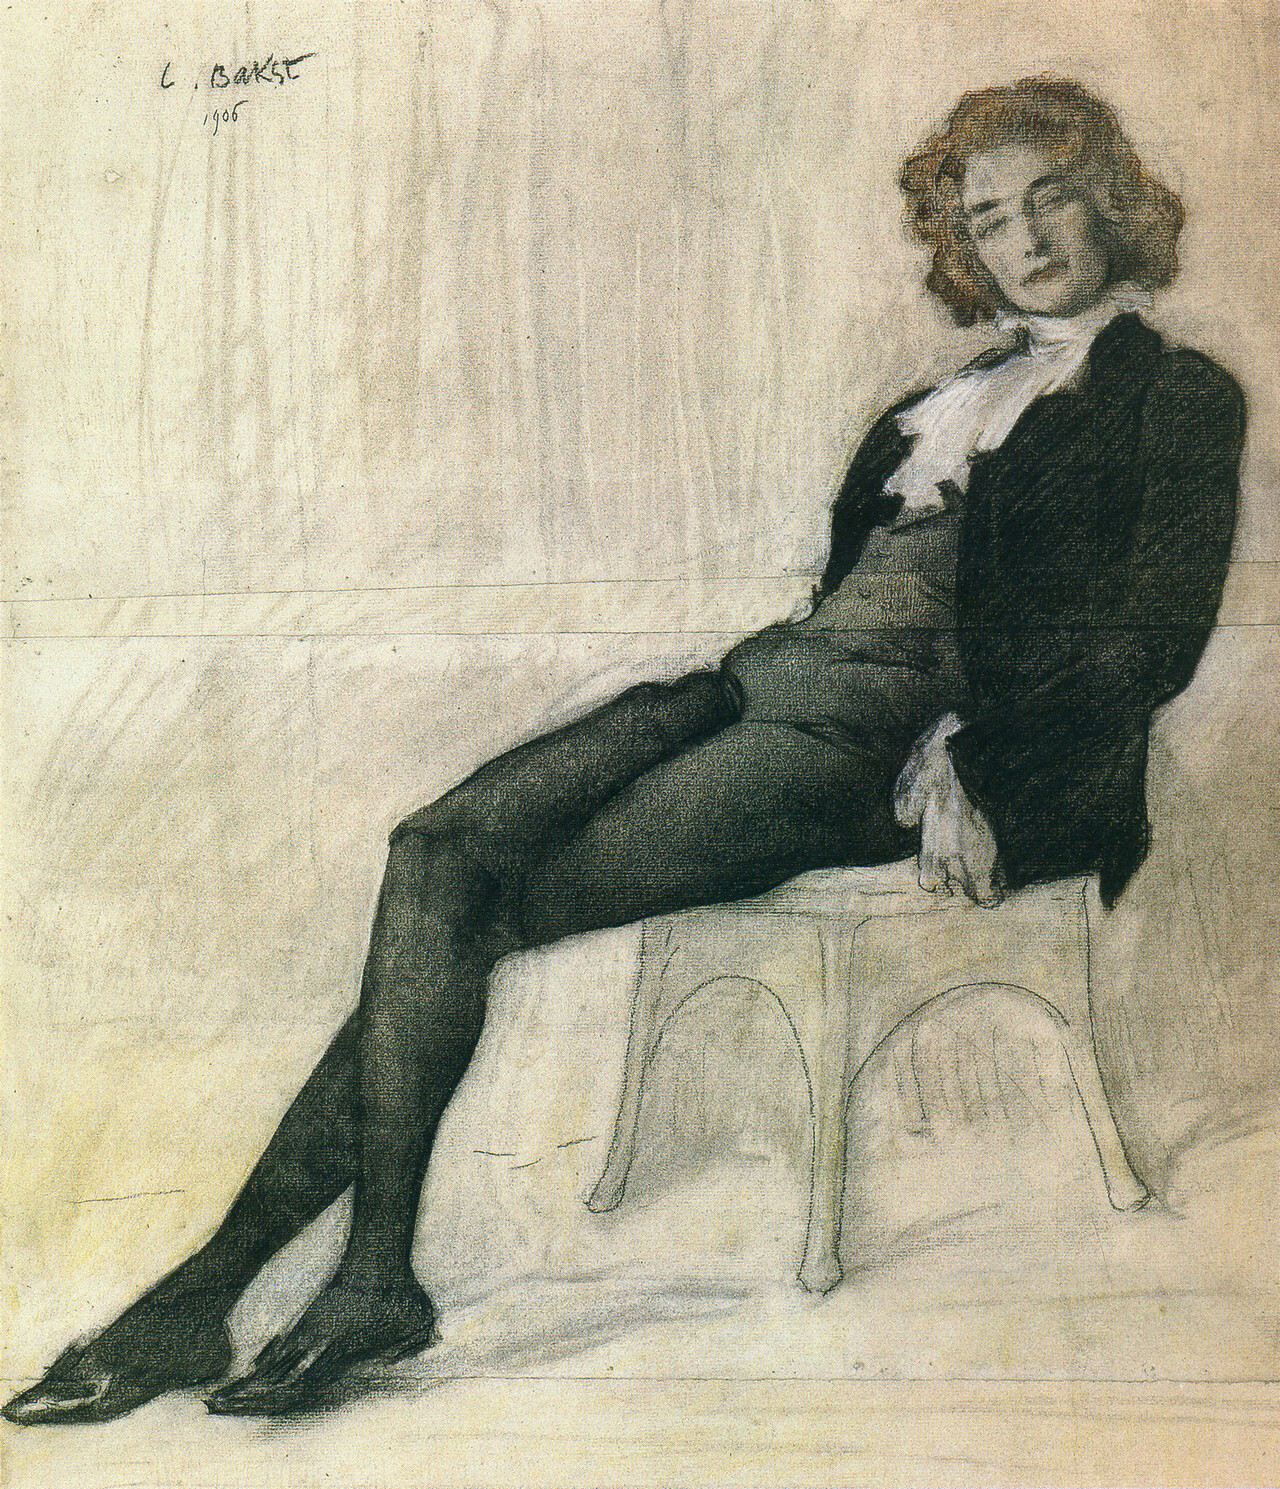 Retrato de Guipius por Leon Bakst, 1906